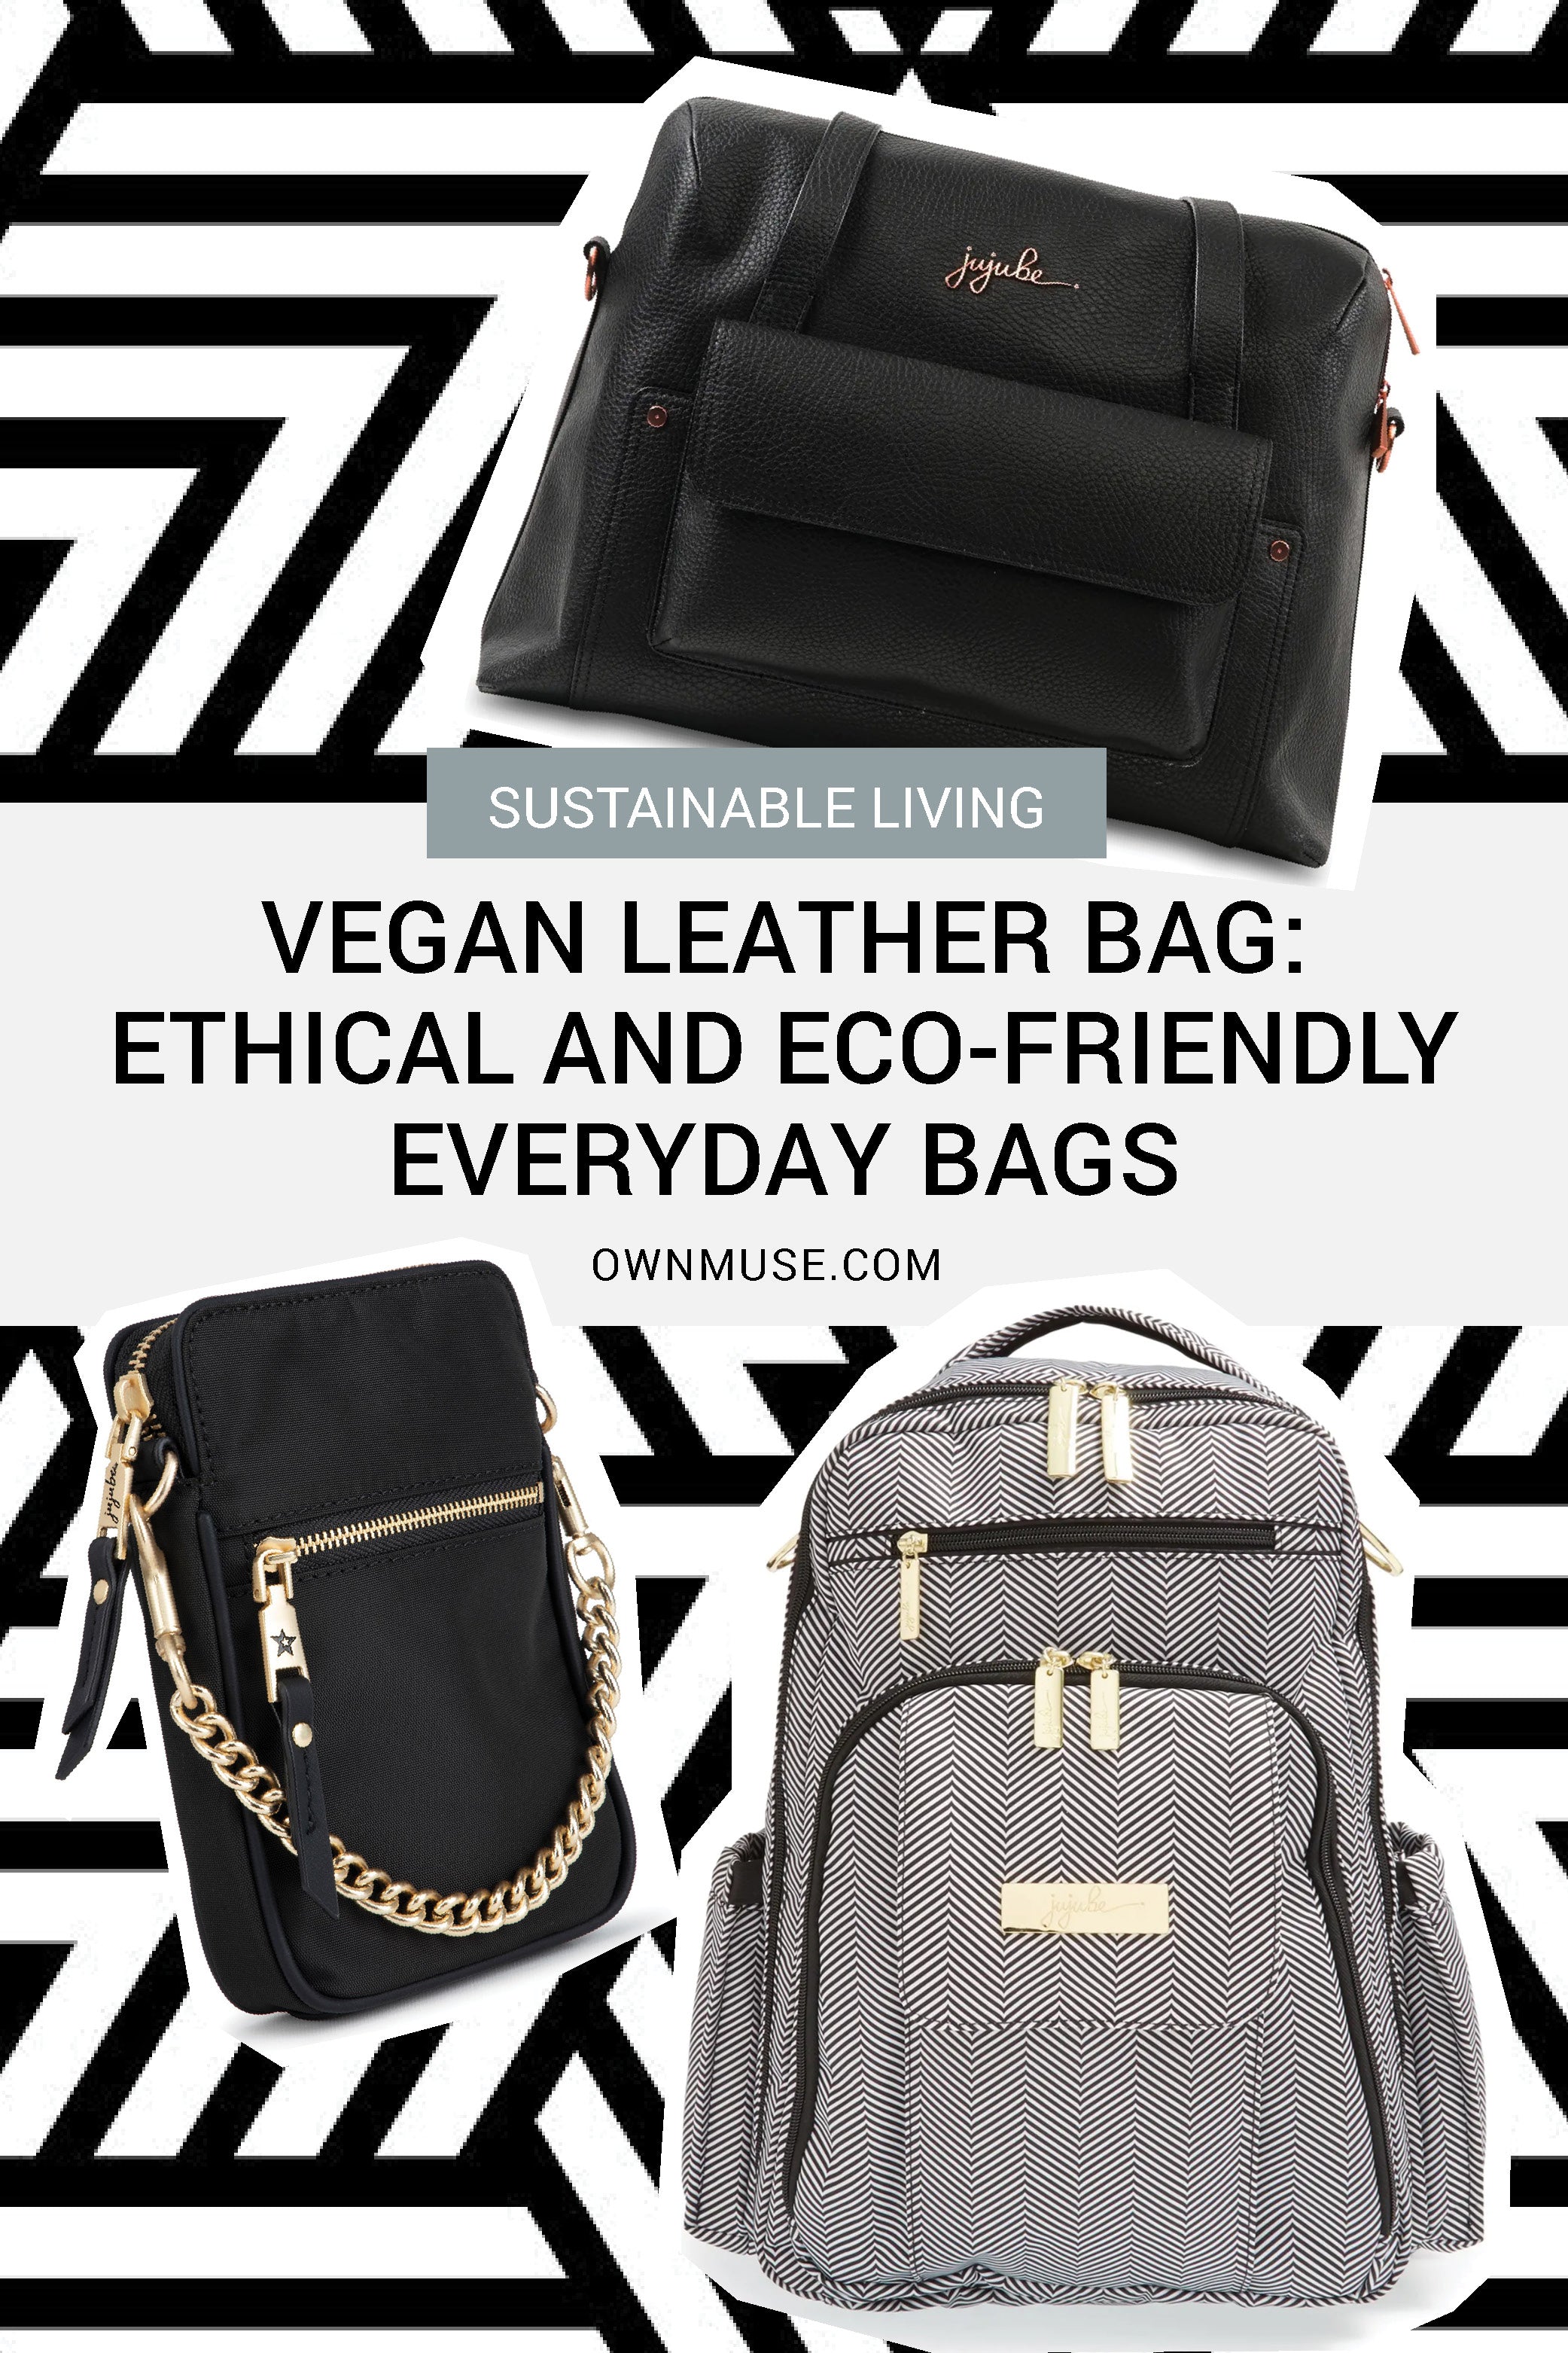 Cruelty-Free Fashion: 5 Vegan Handbag Brands We Love